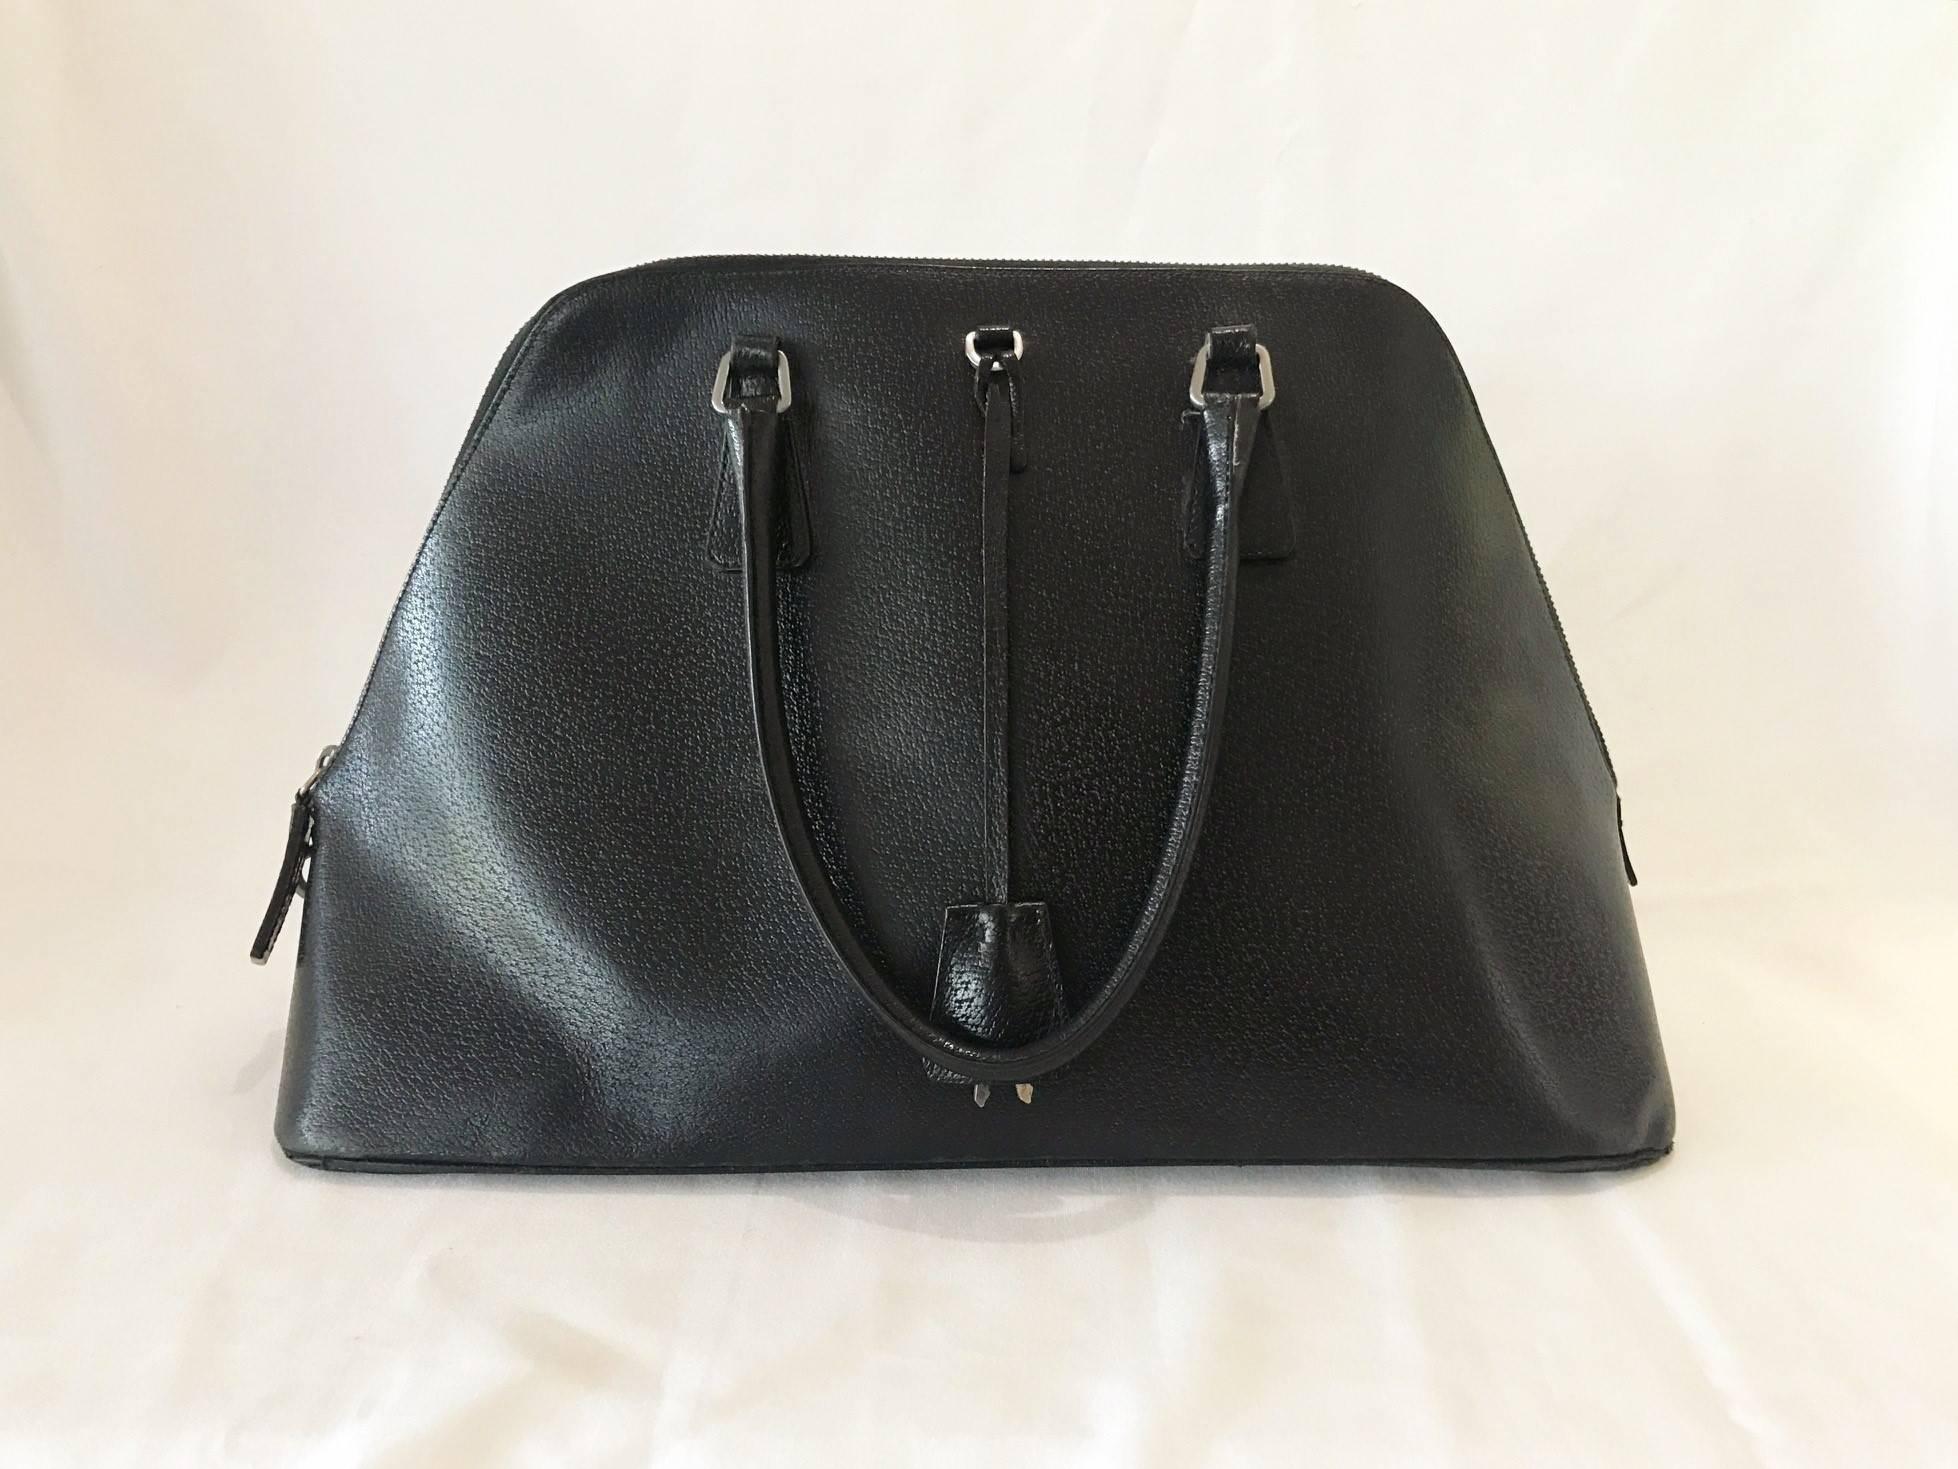 Black Beauty Prada Handbag with Key and Lock, Authentic Prada Leather Bag For Sale 1